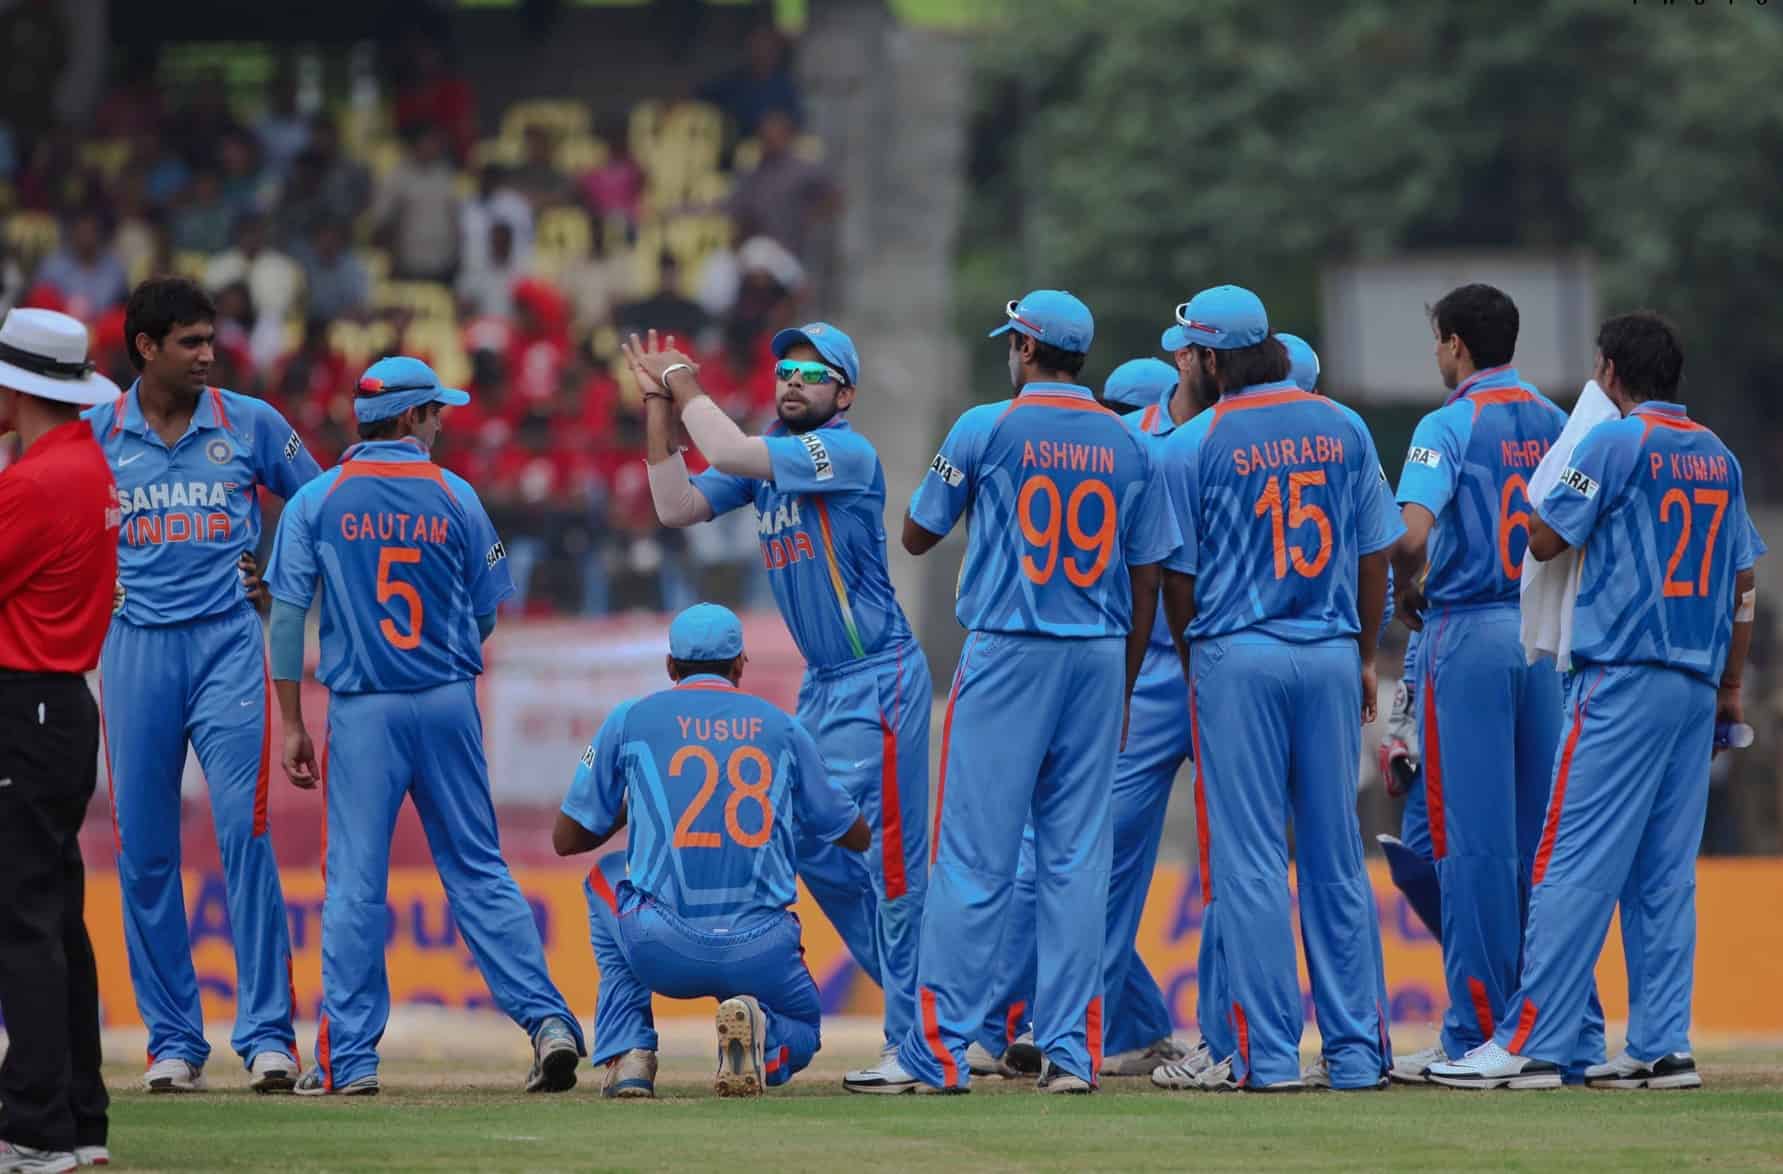 The Indian cricket team will be taking on Sri Lanka